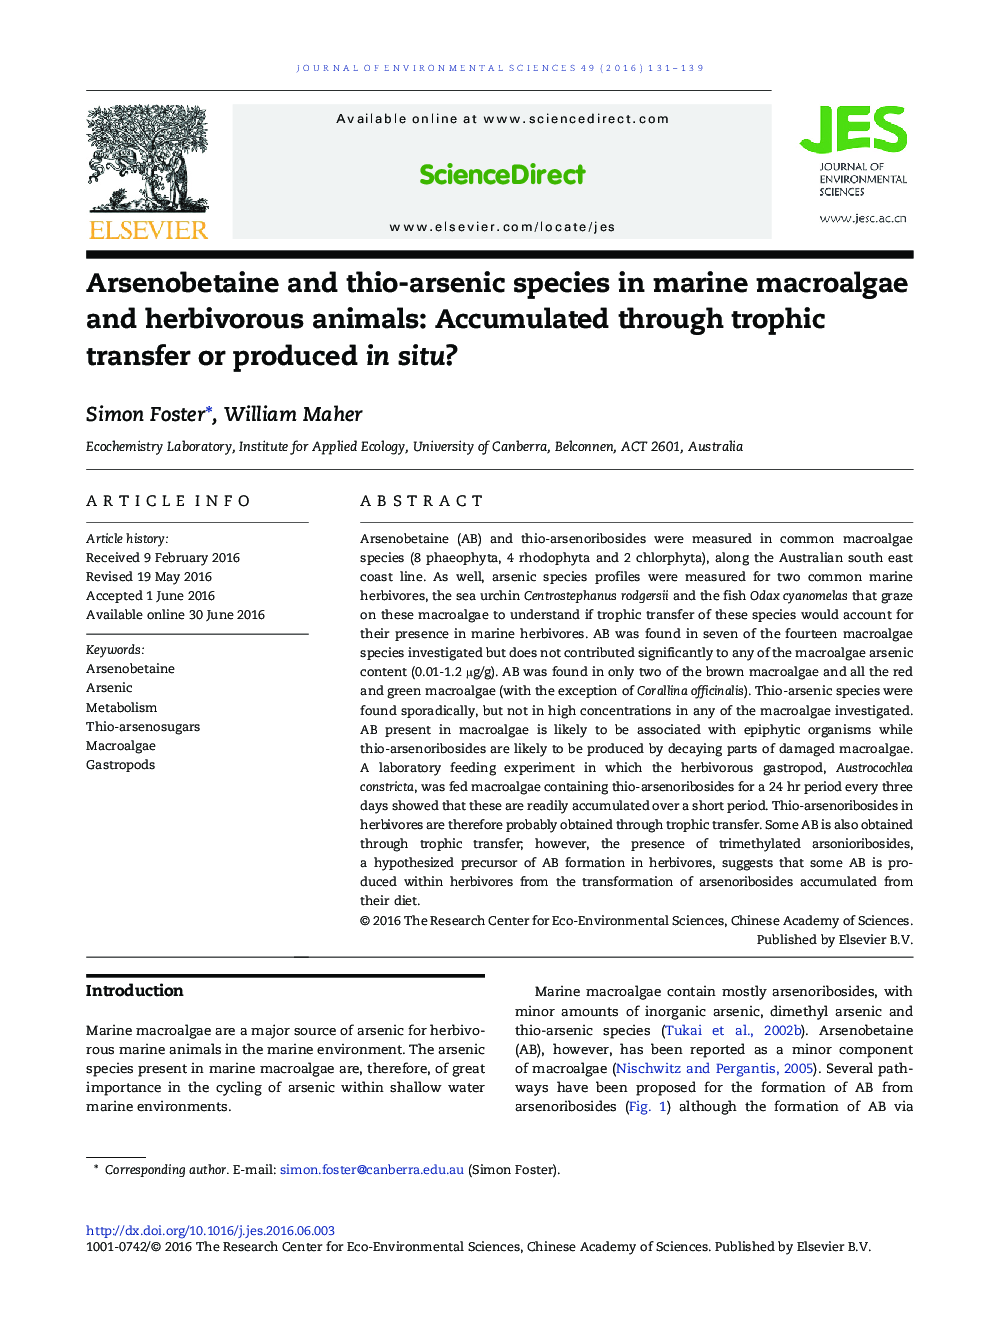 Arsenobetaine and thio-arsenic species in marine macroalgae and herbivorous animals: Accumulated through trophic transfer or produced in situ?